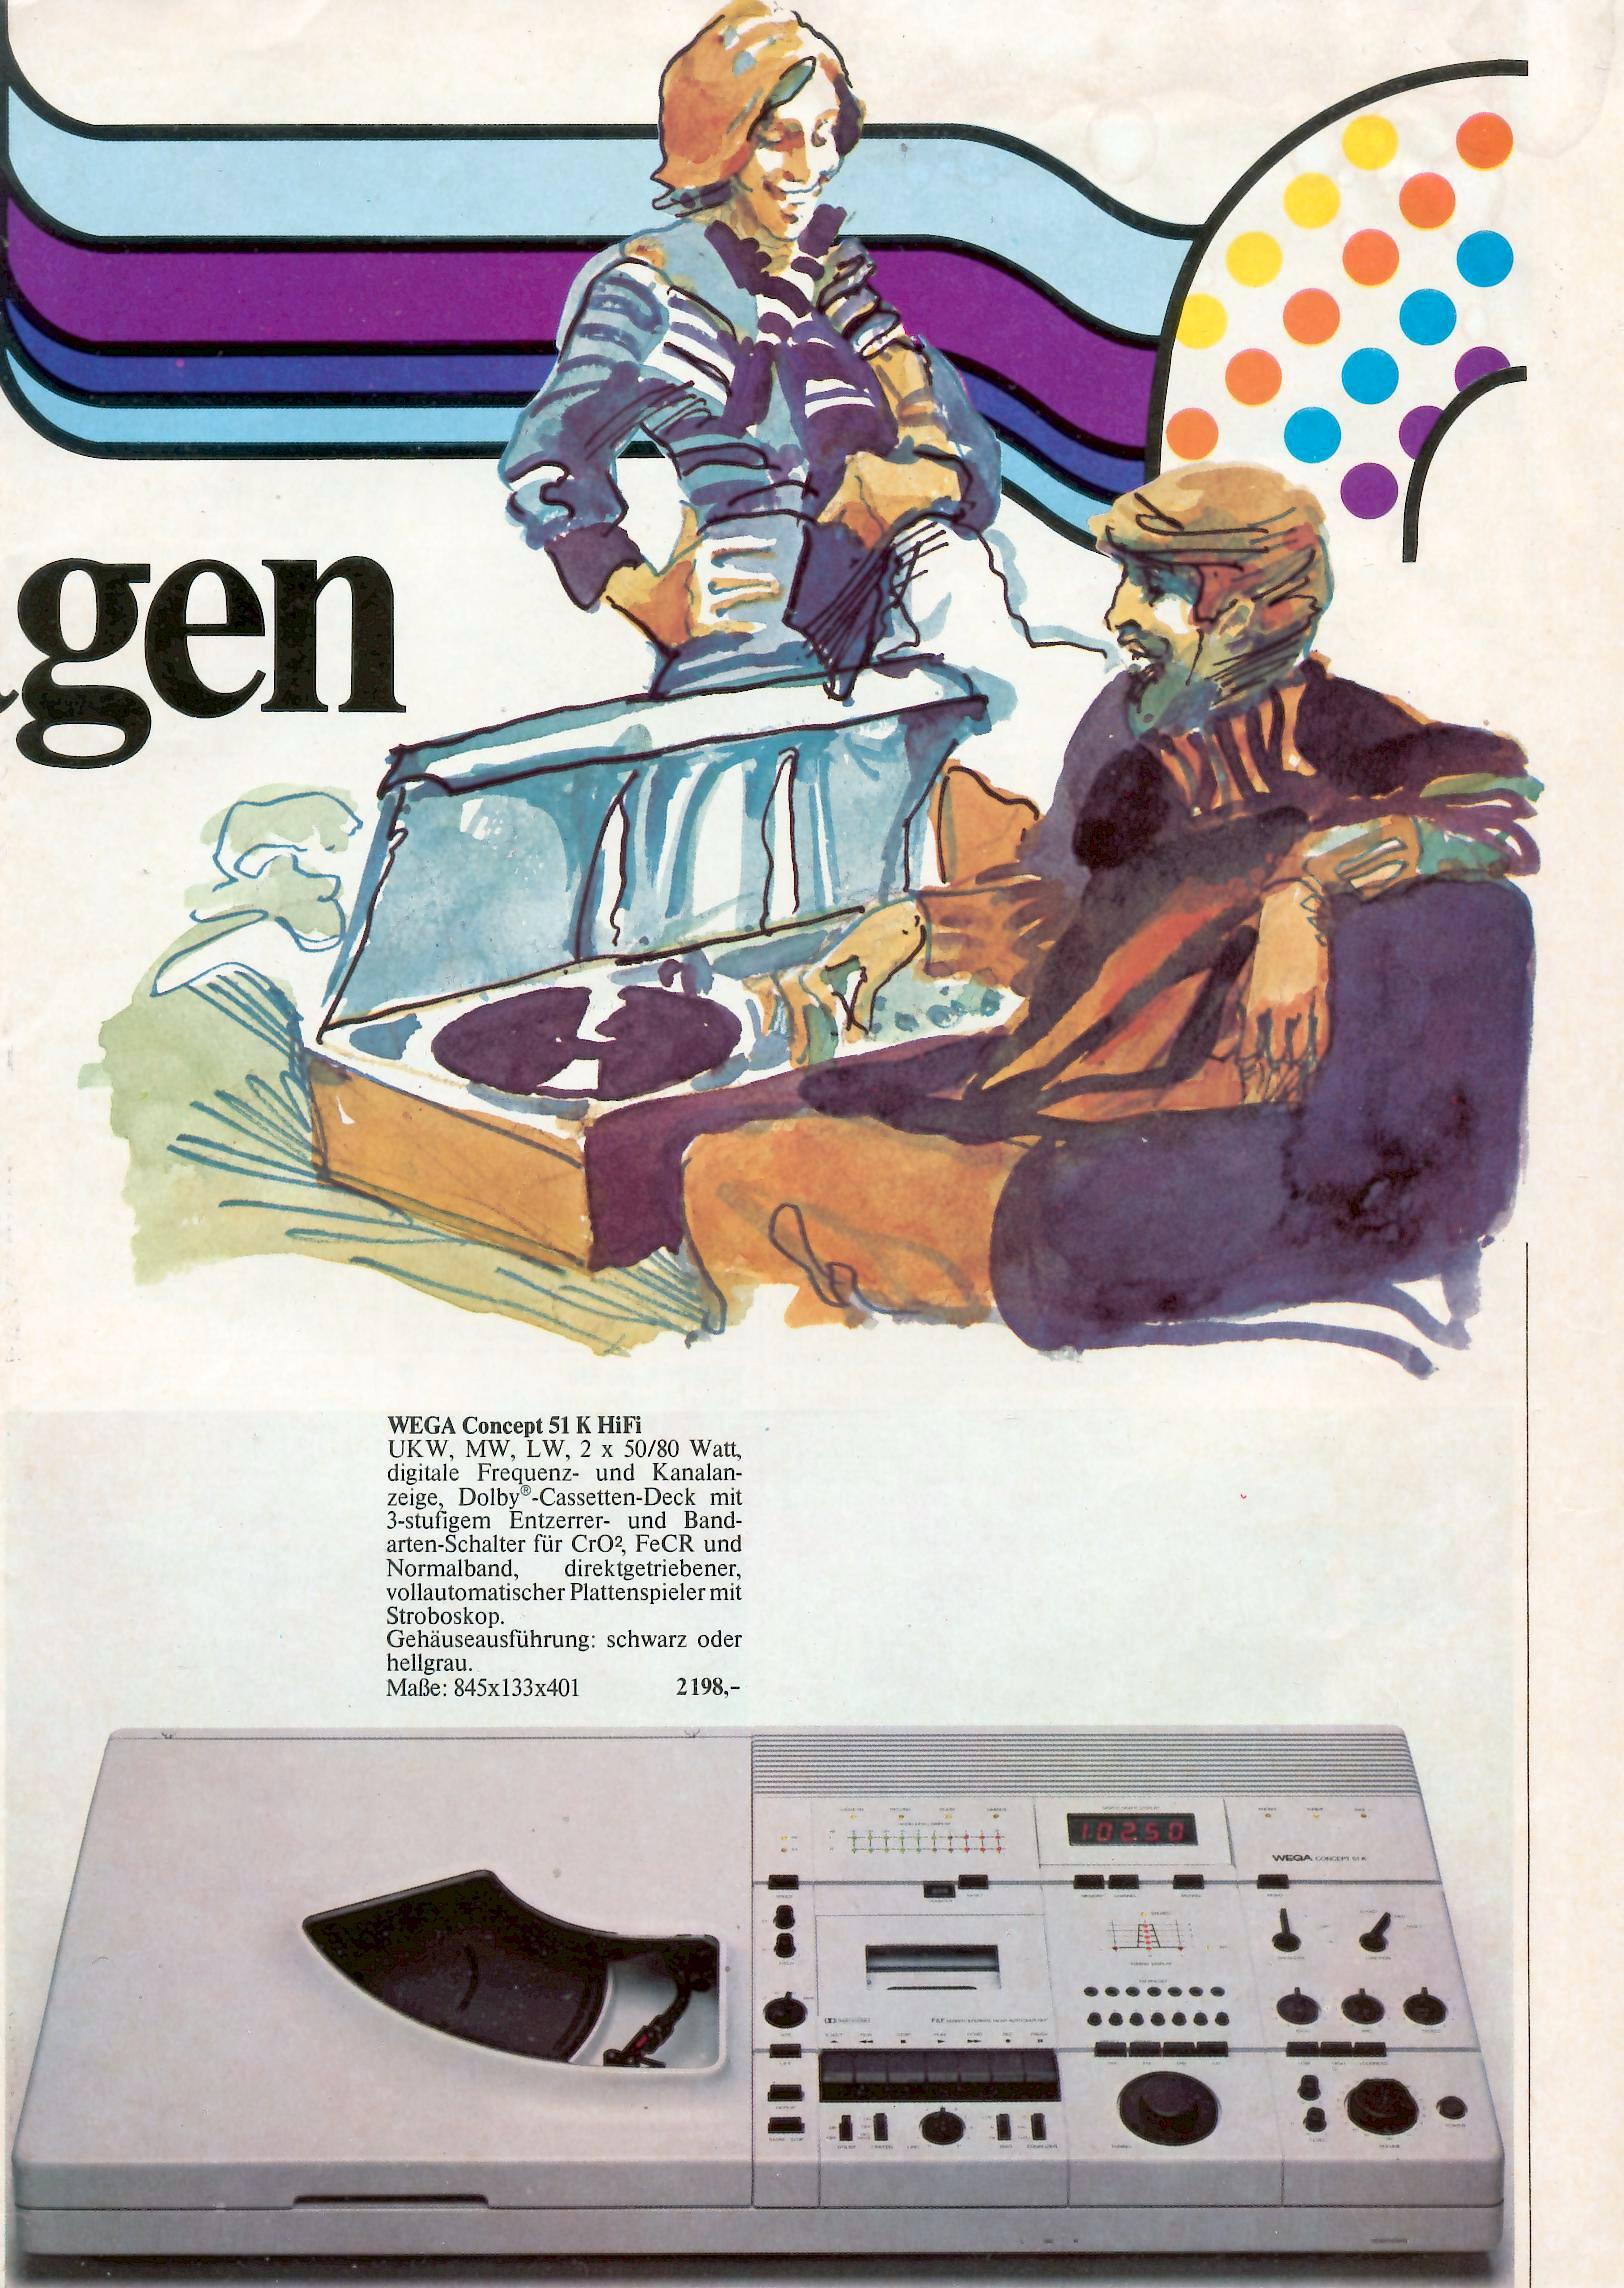 Wega Concept 51 k-Werbung-1978.jpg